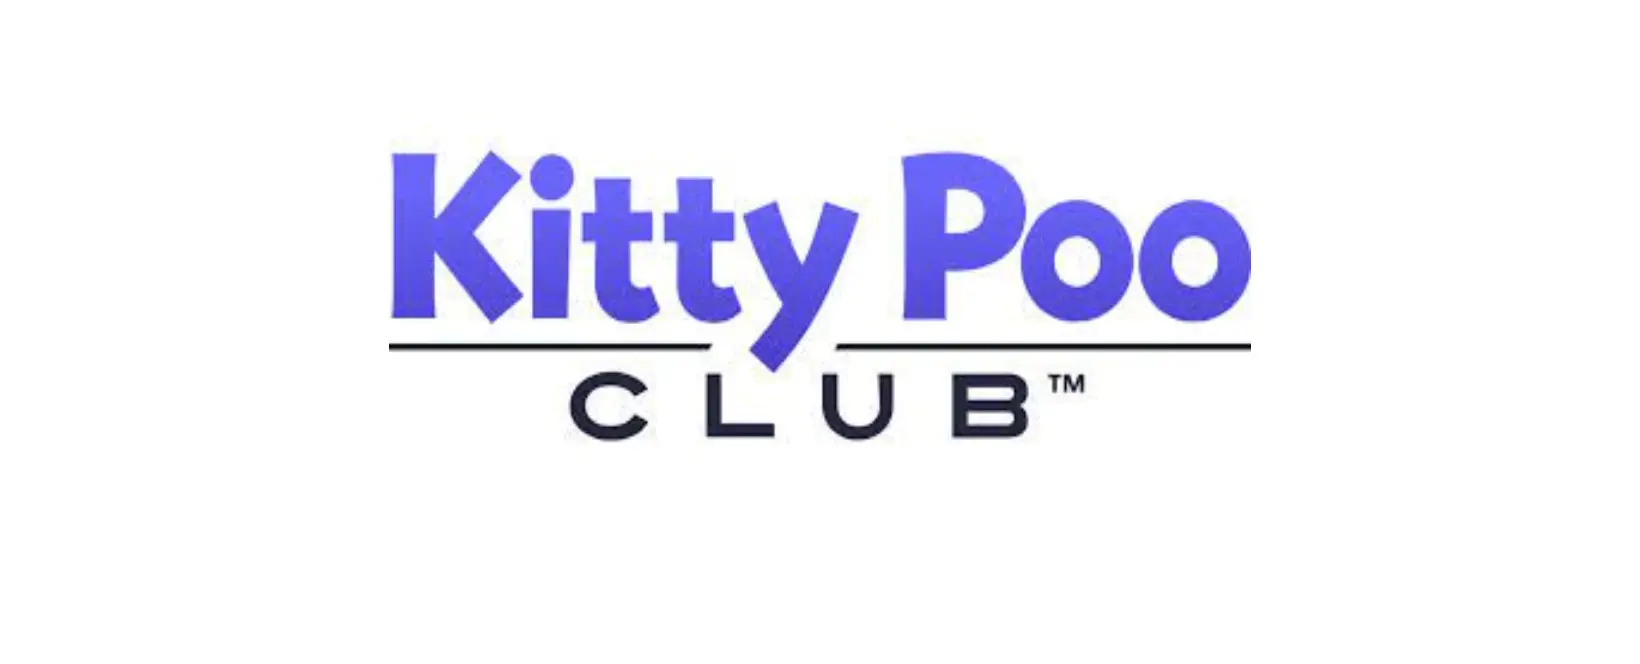 Kitty Poo Club Discount Code 2022